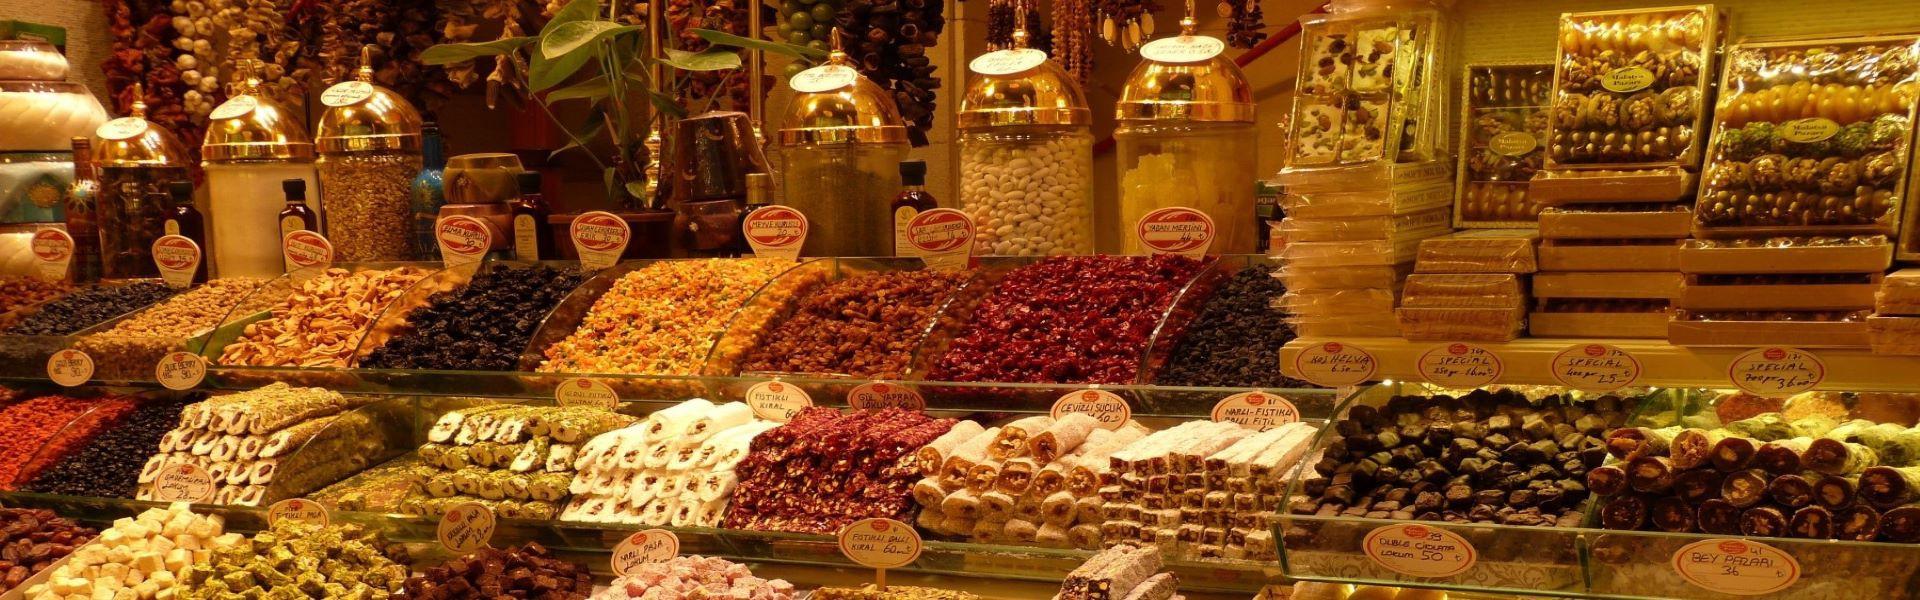 بازار ادویه استانبول Spice bazaar Istanbul